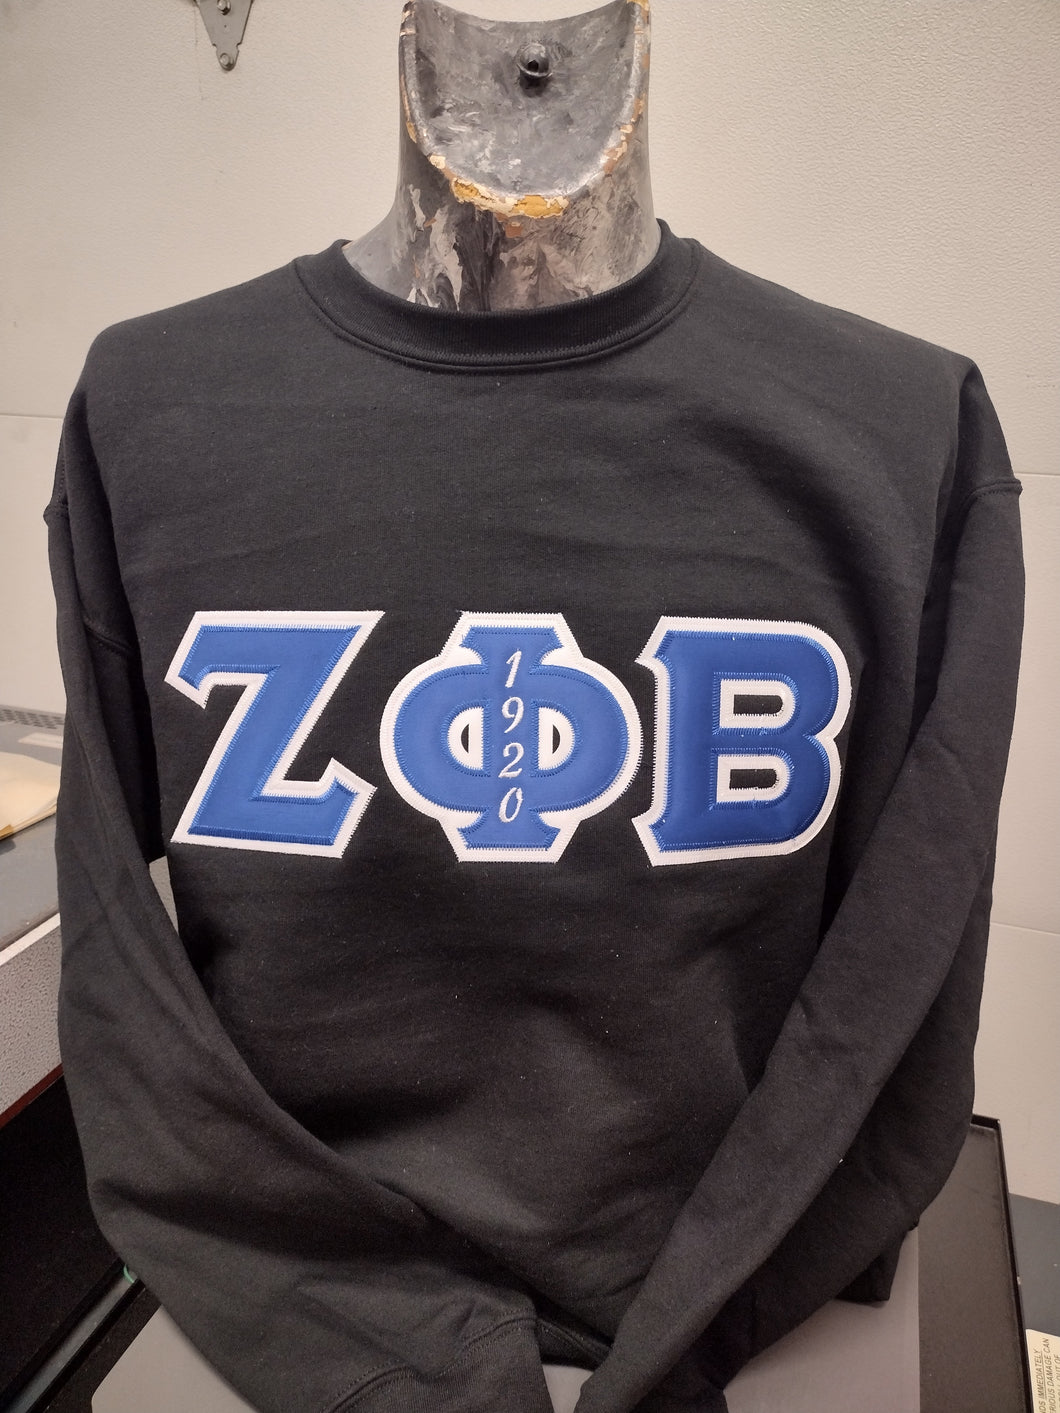 Sweatshirt with Applique Letters